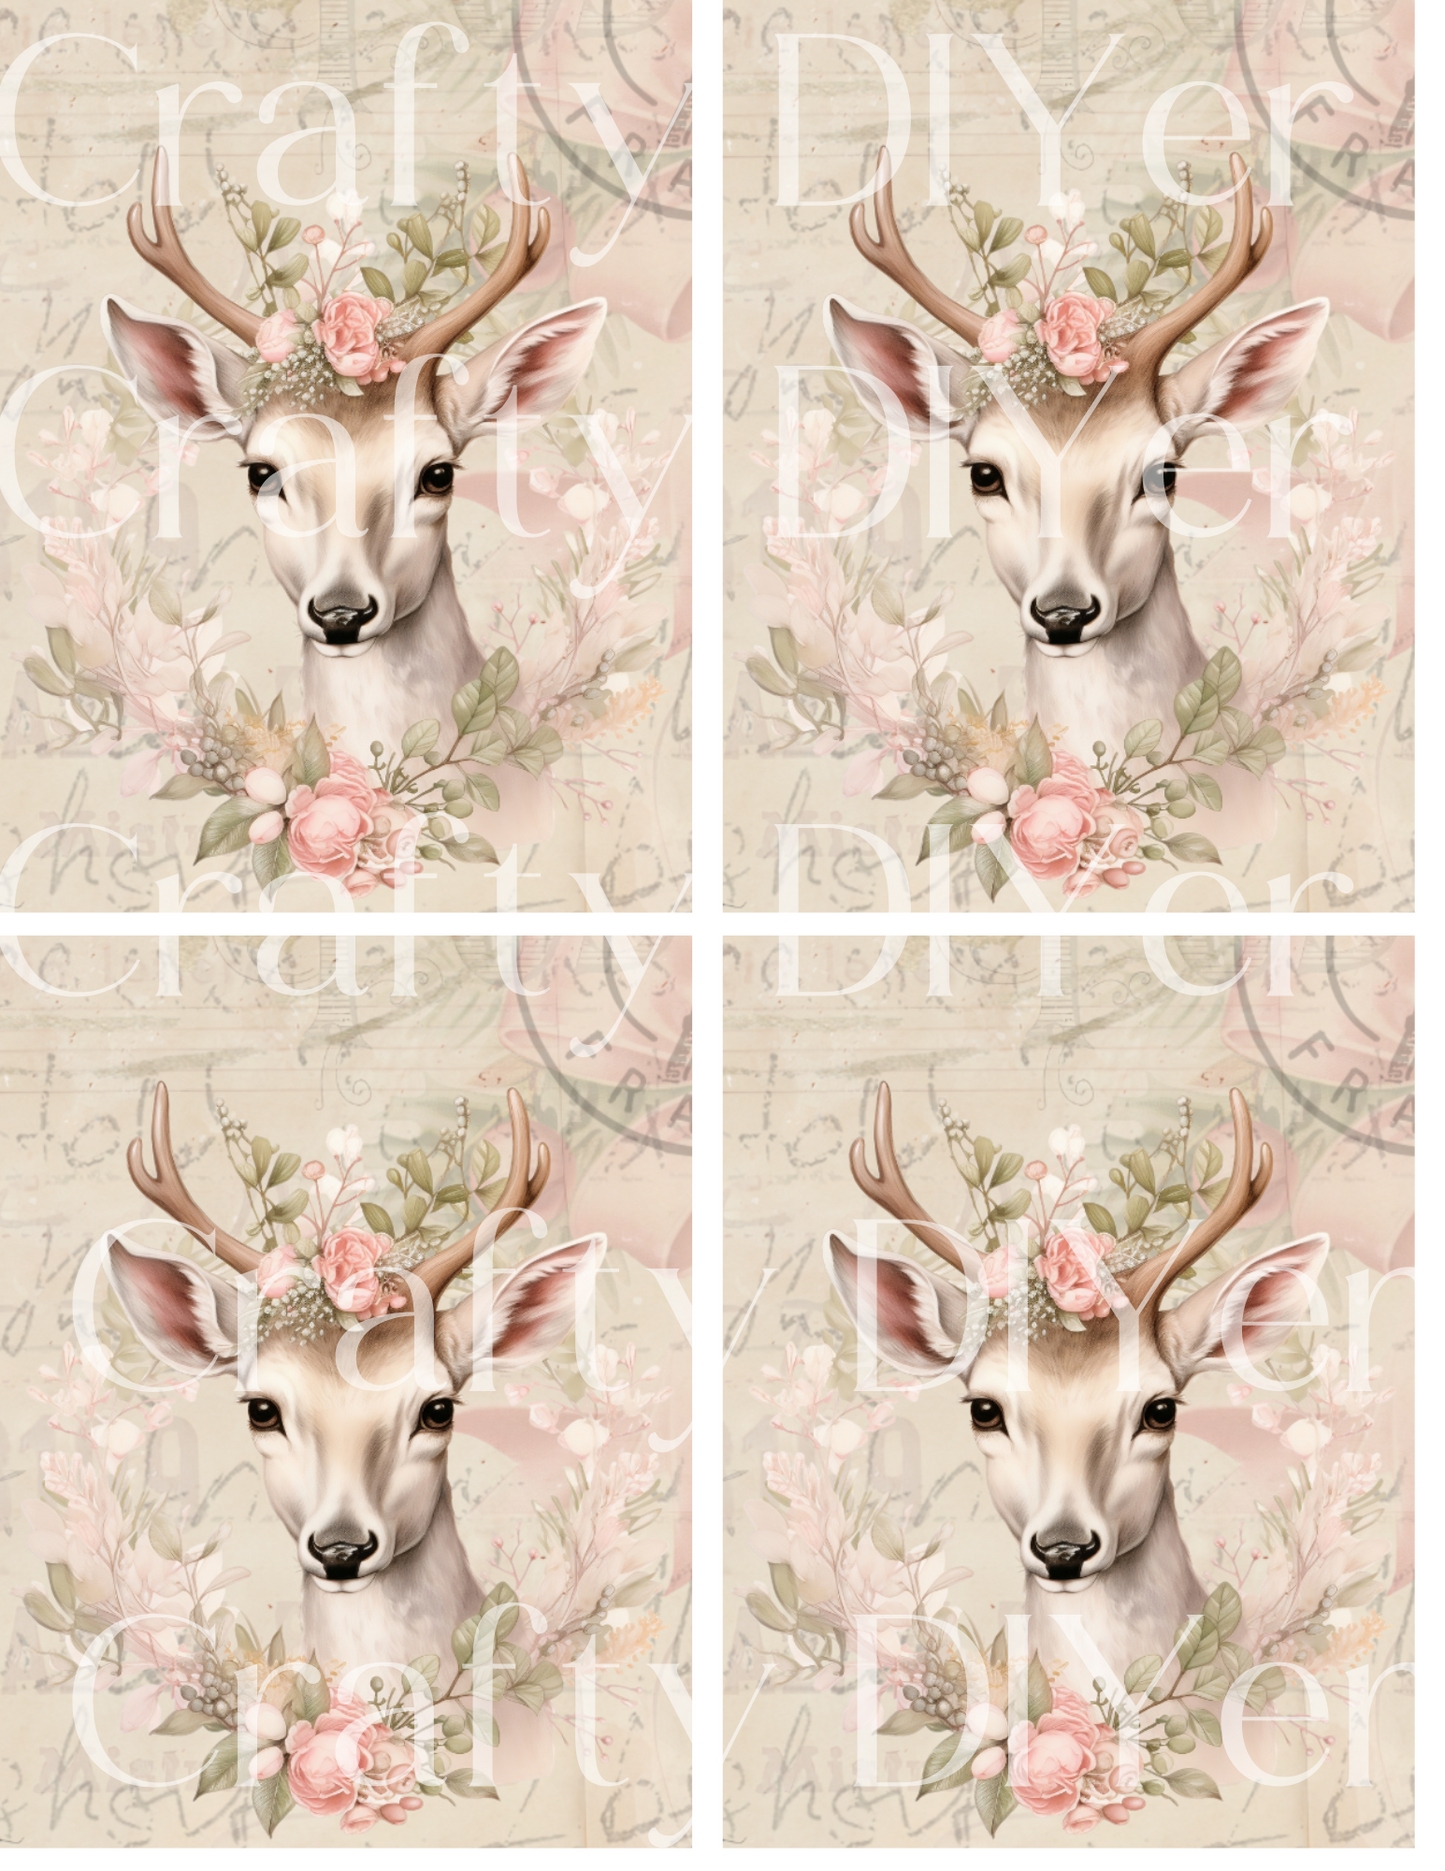 Mystical Deer Digital Print